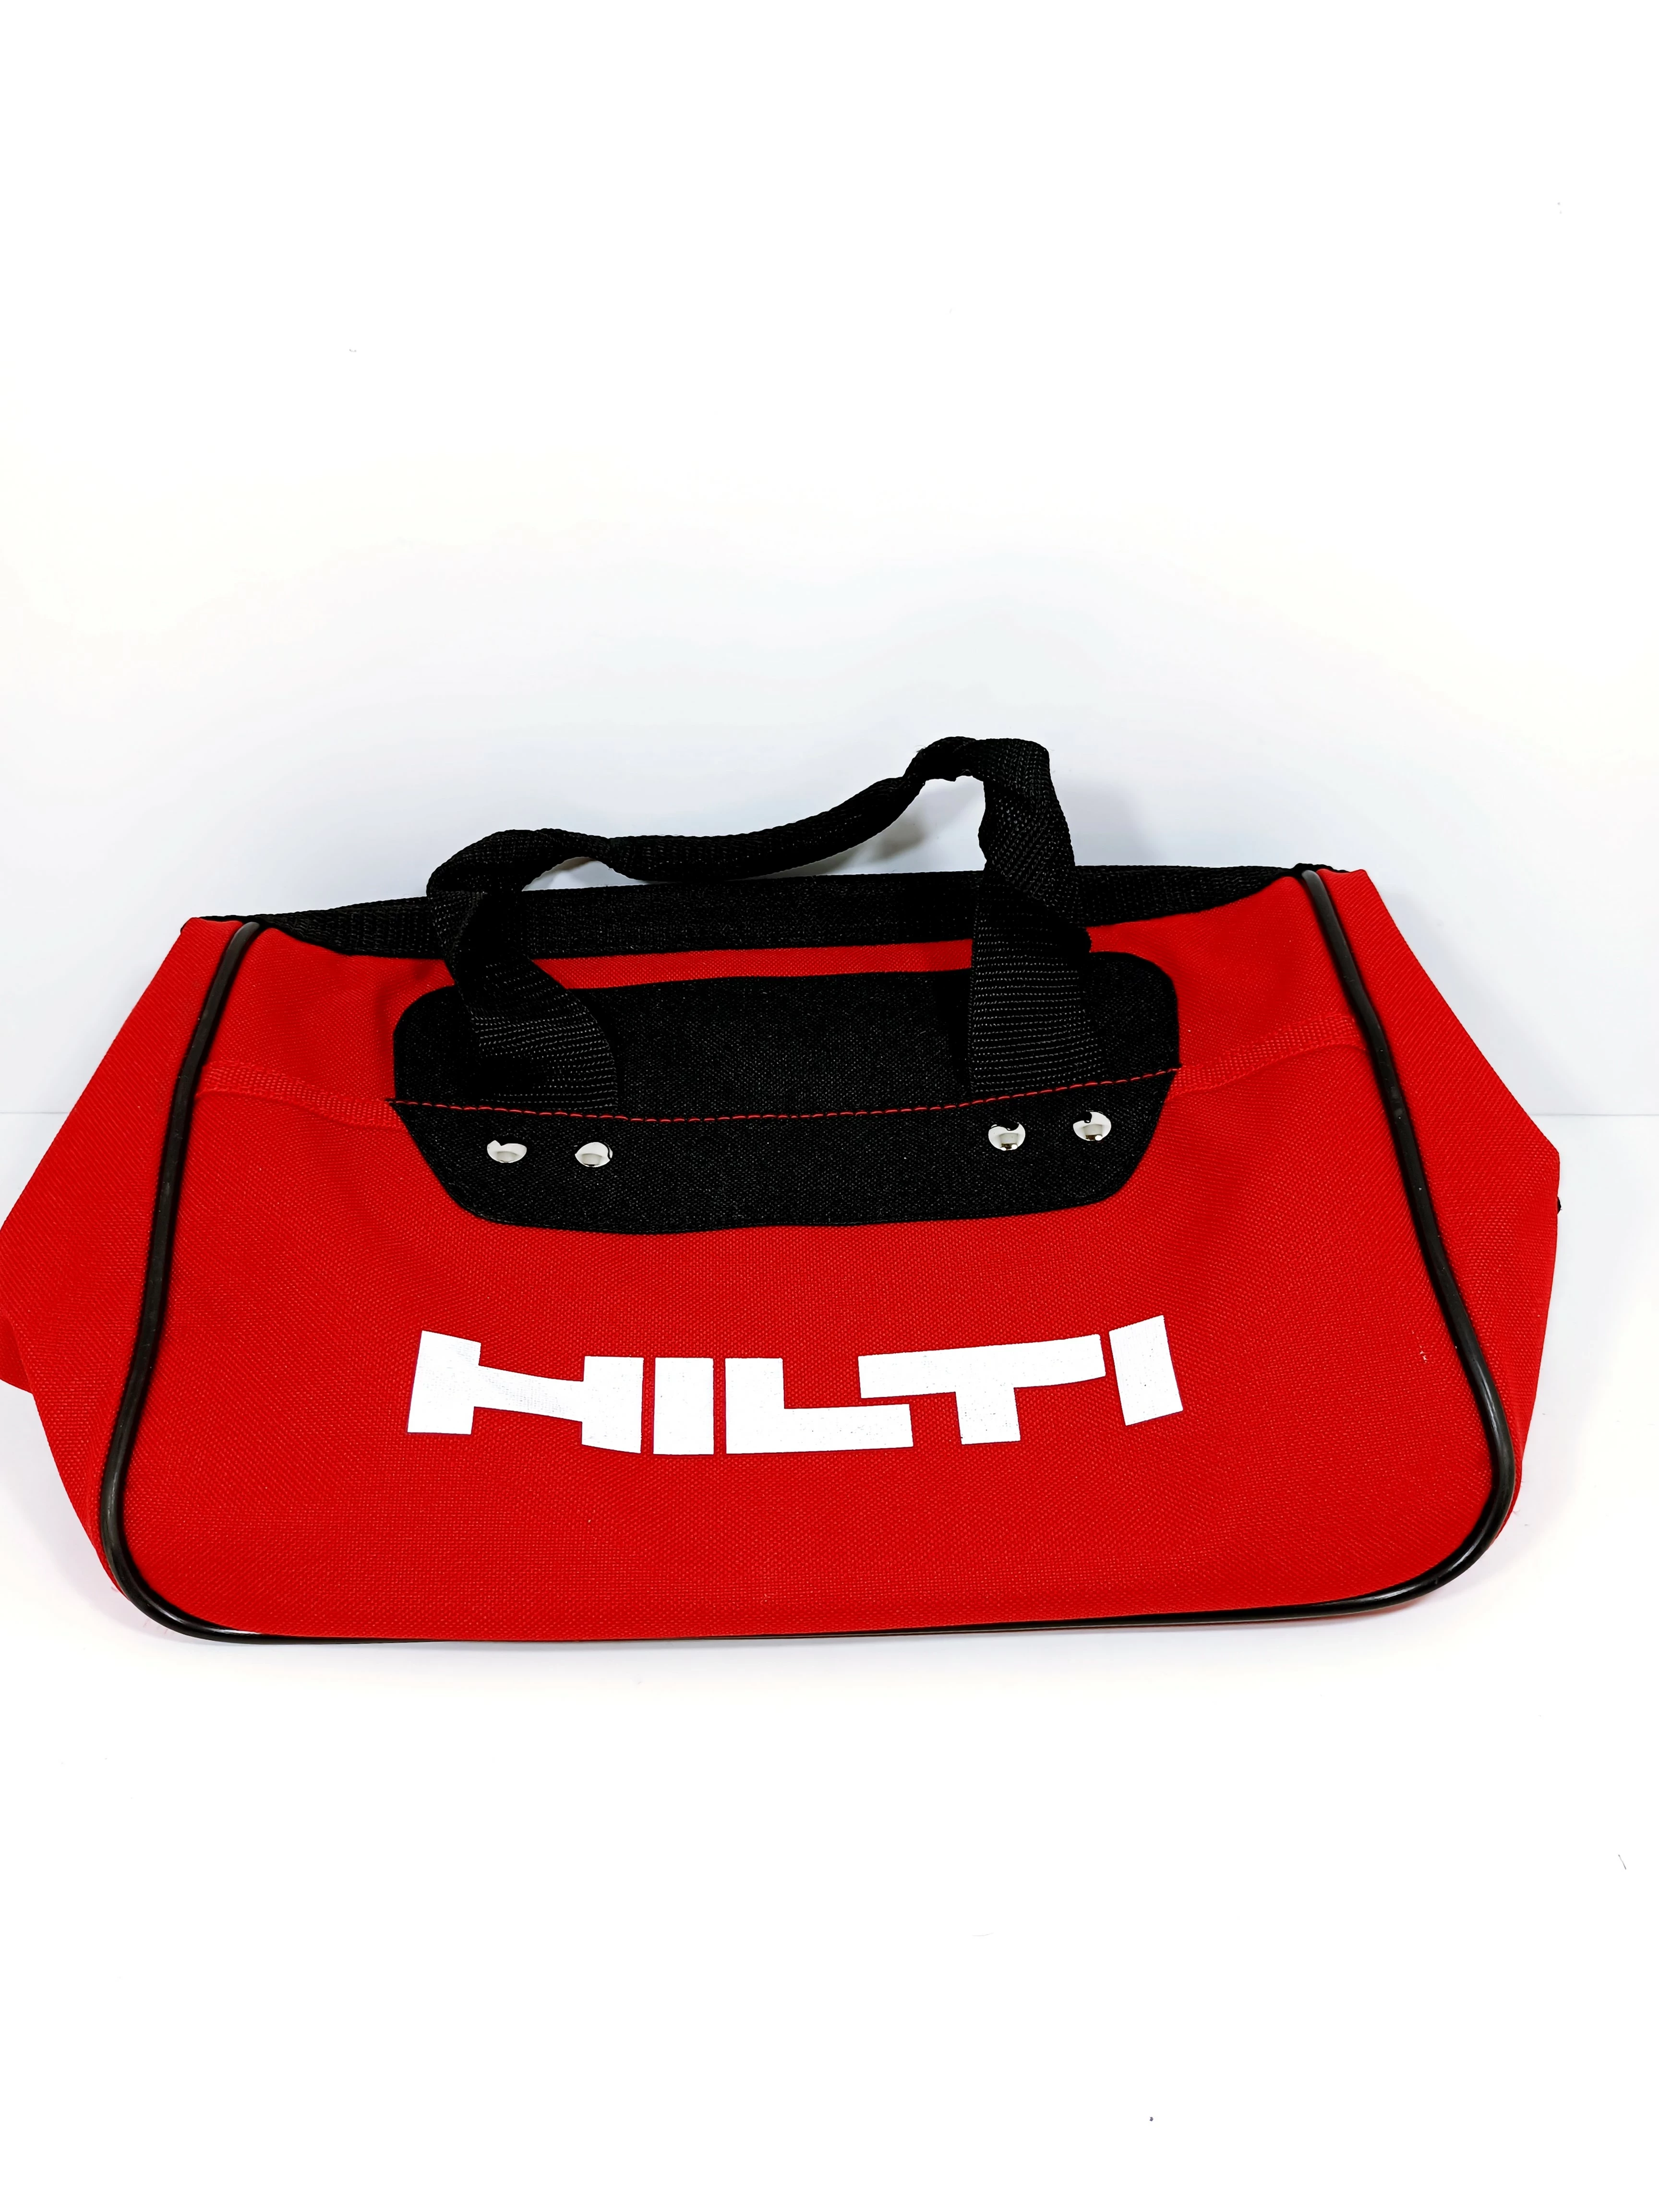 Hilti Medium Soft Bag Heavy Duty Construction Contractor Tool Bag  18"x13x12" | eBay